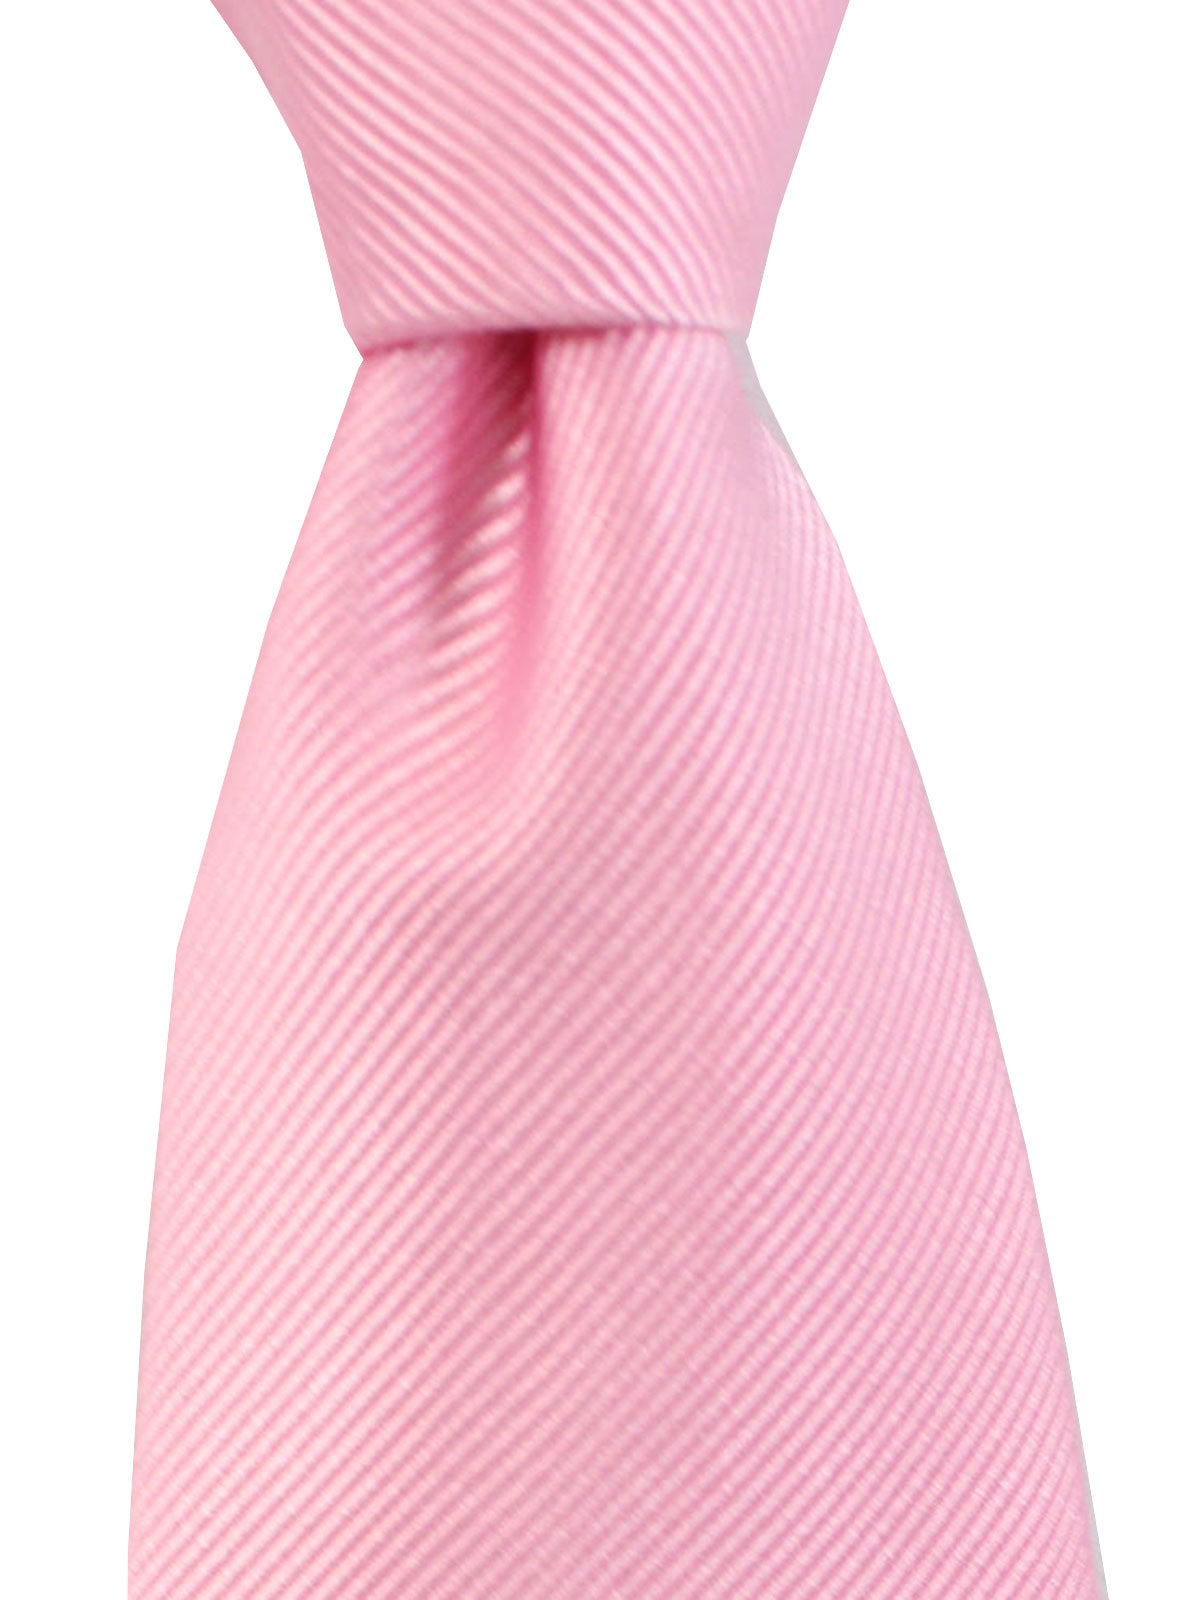 Cesare Attolini Unlined Tie Pink Grosgrain - Tie Deals